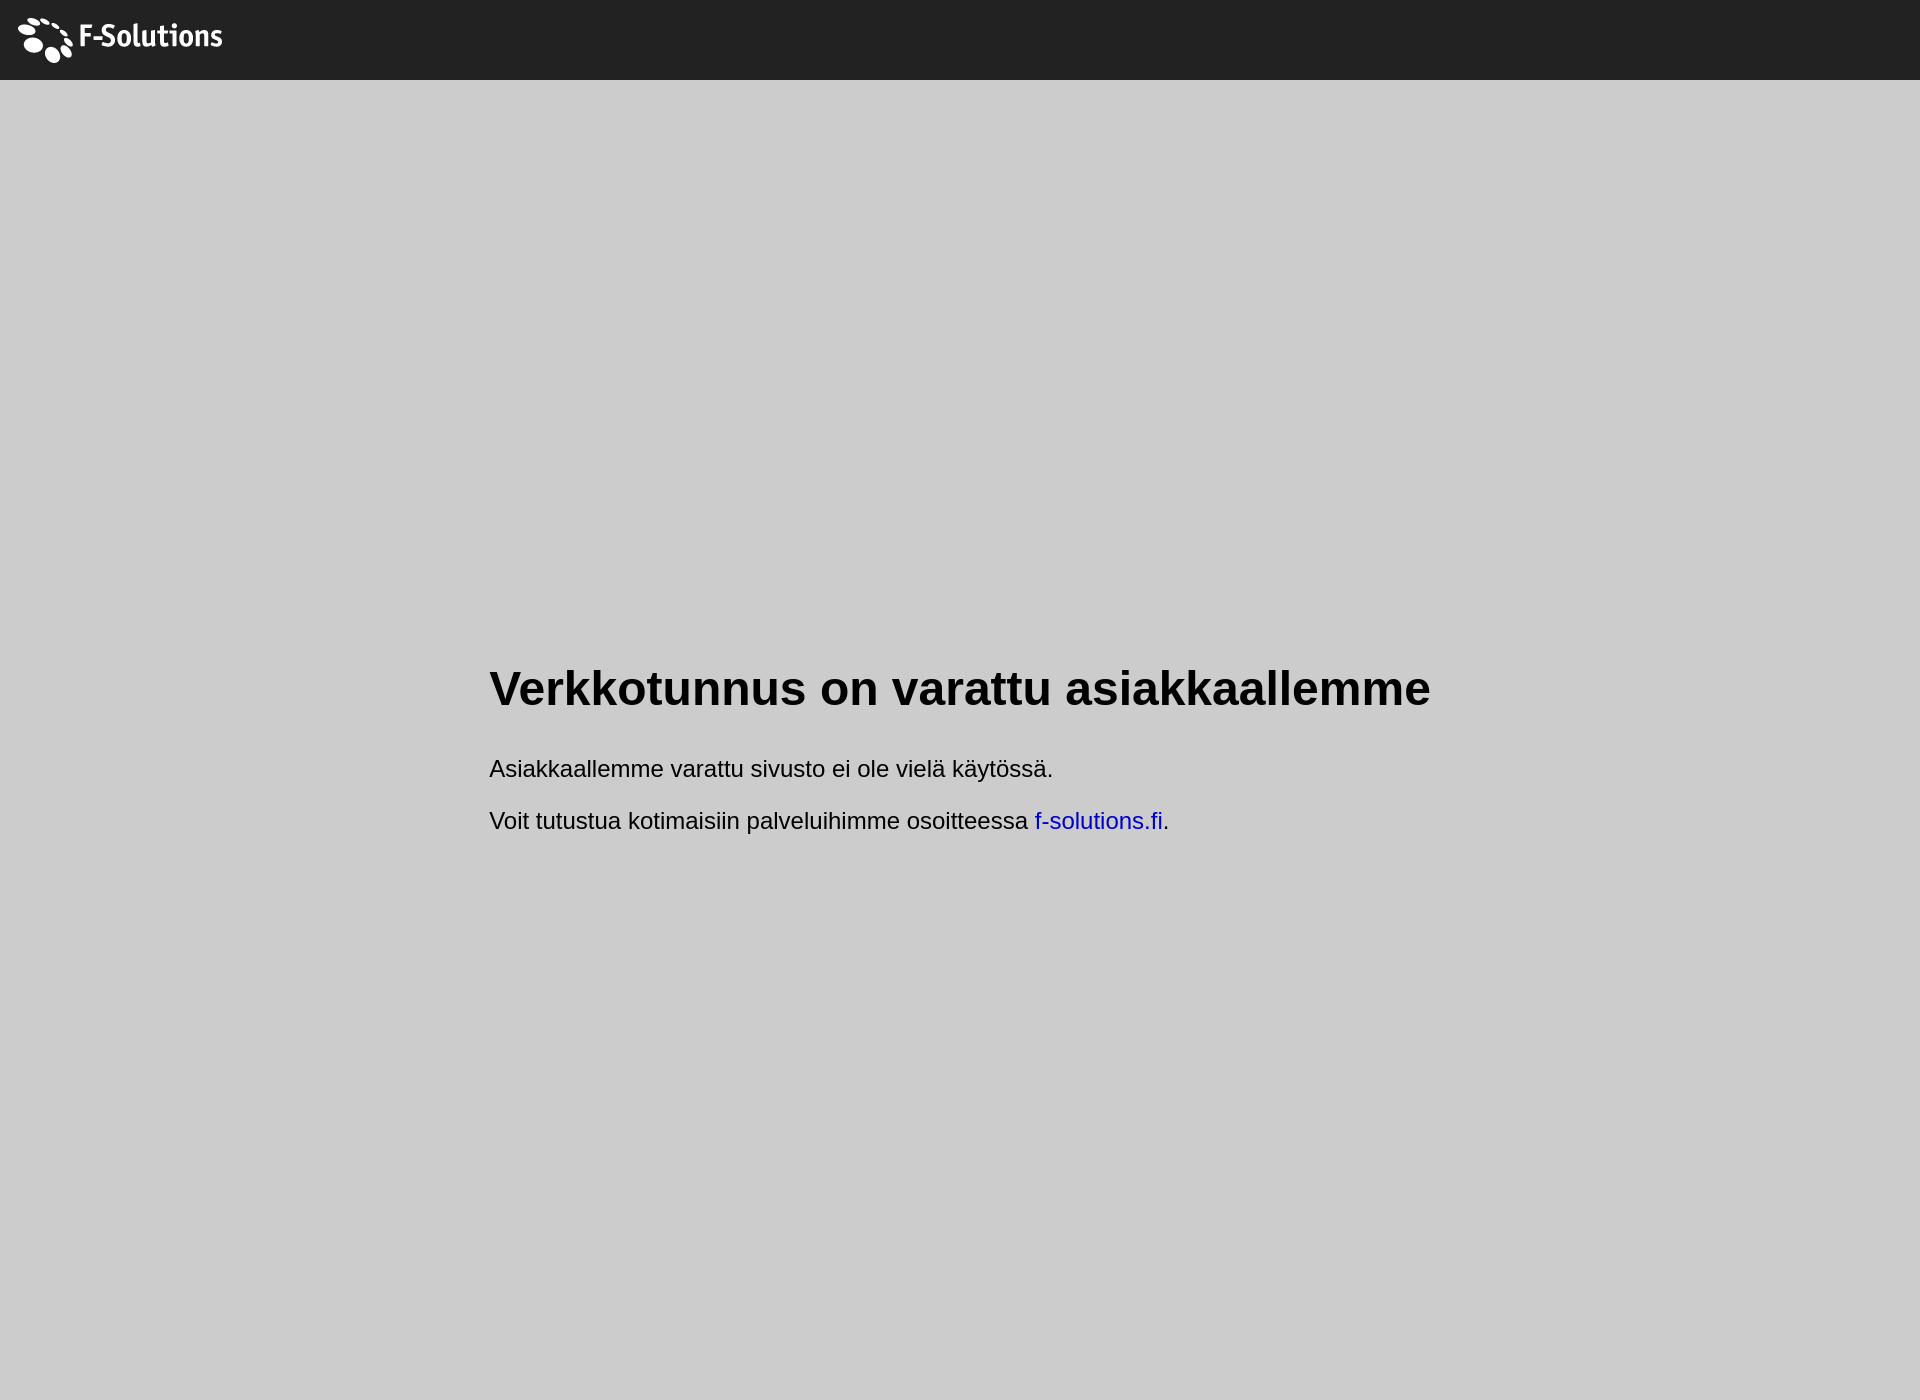 Screenshot for oulutilitoimistoratinki.fi